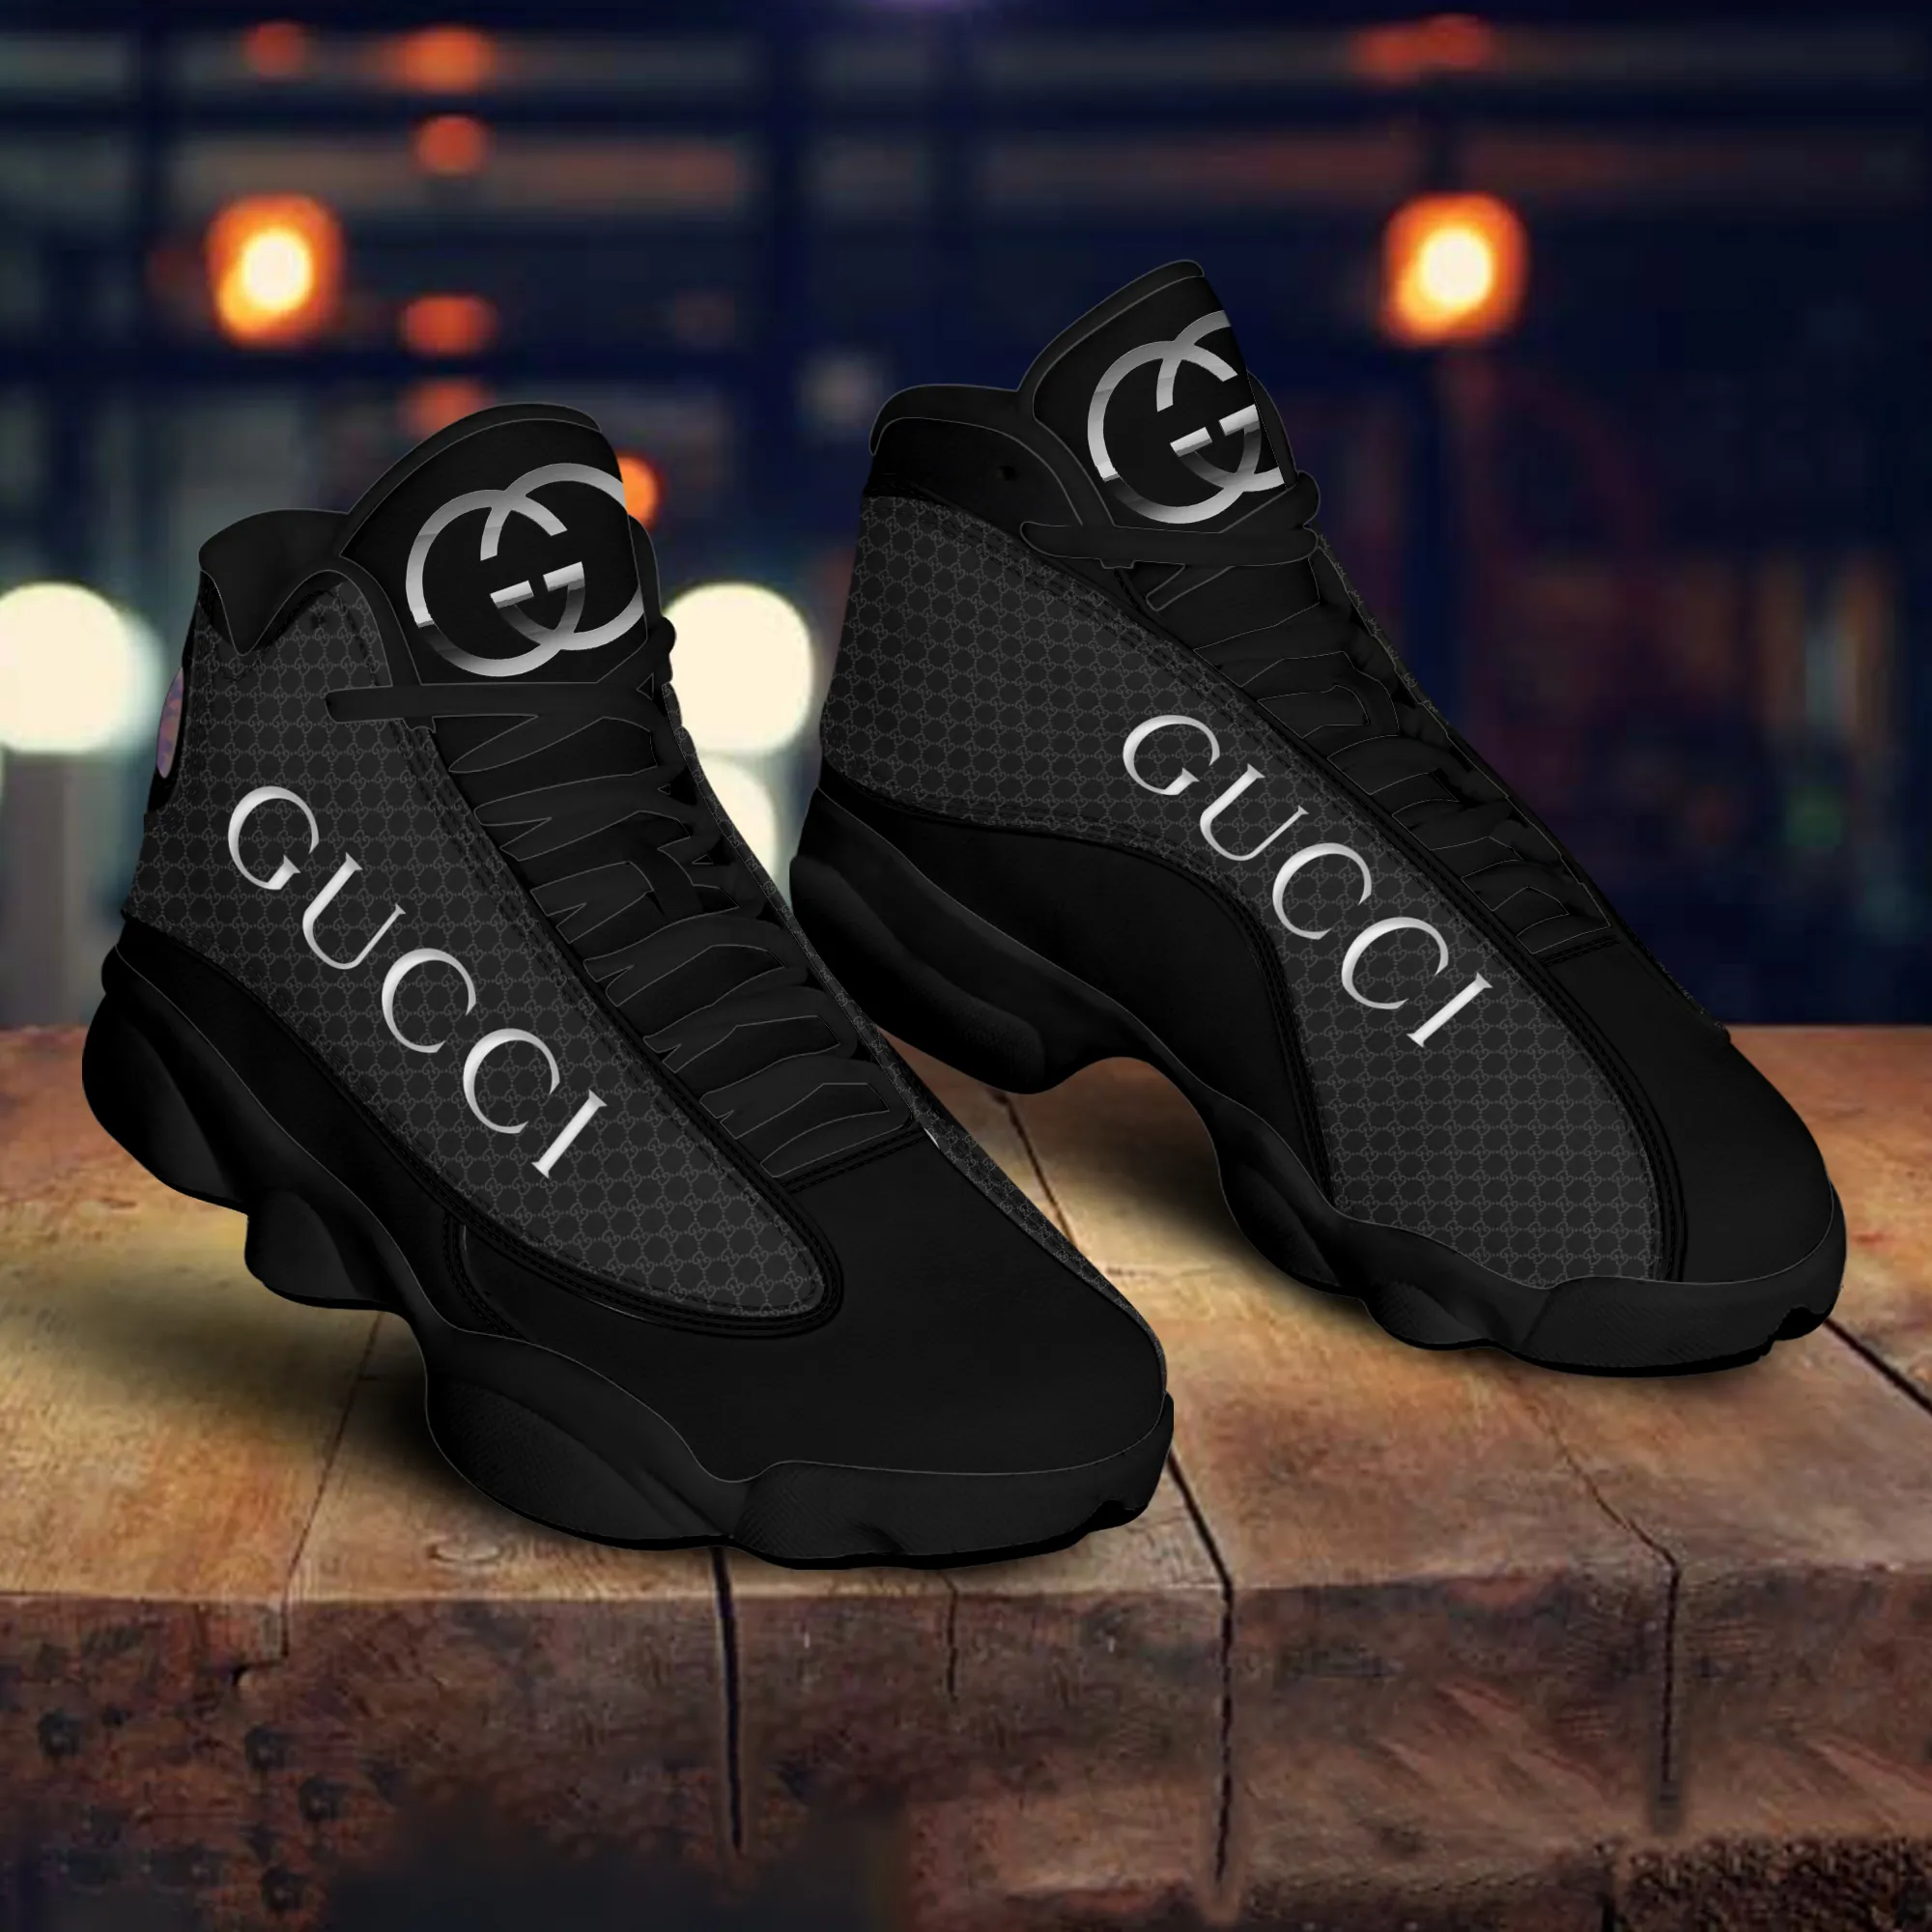 Gucci Black White Air Jordan 13 Luxury Shoes Fashion Sneakers Trending